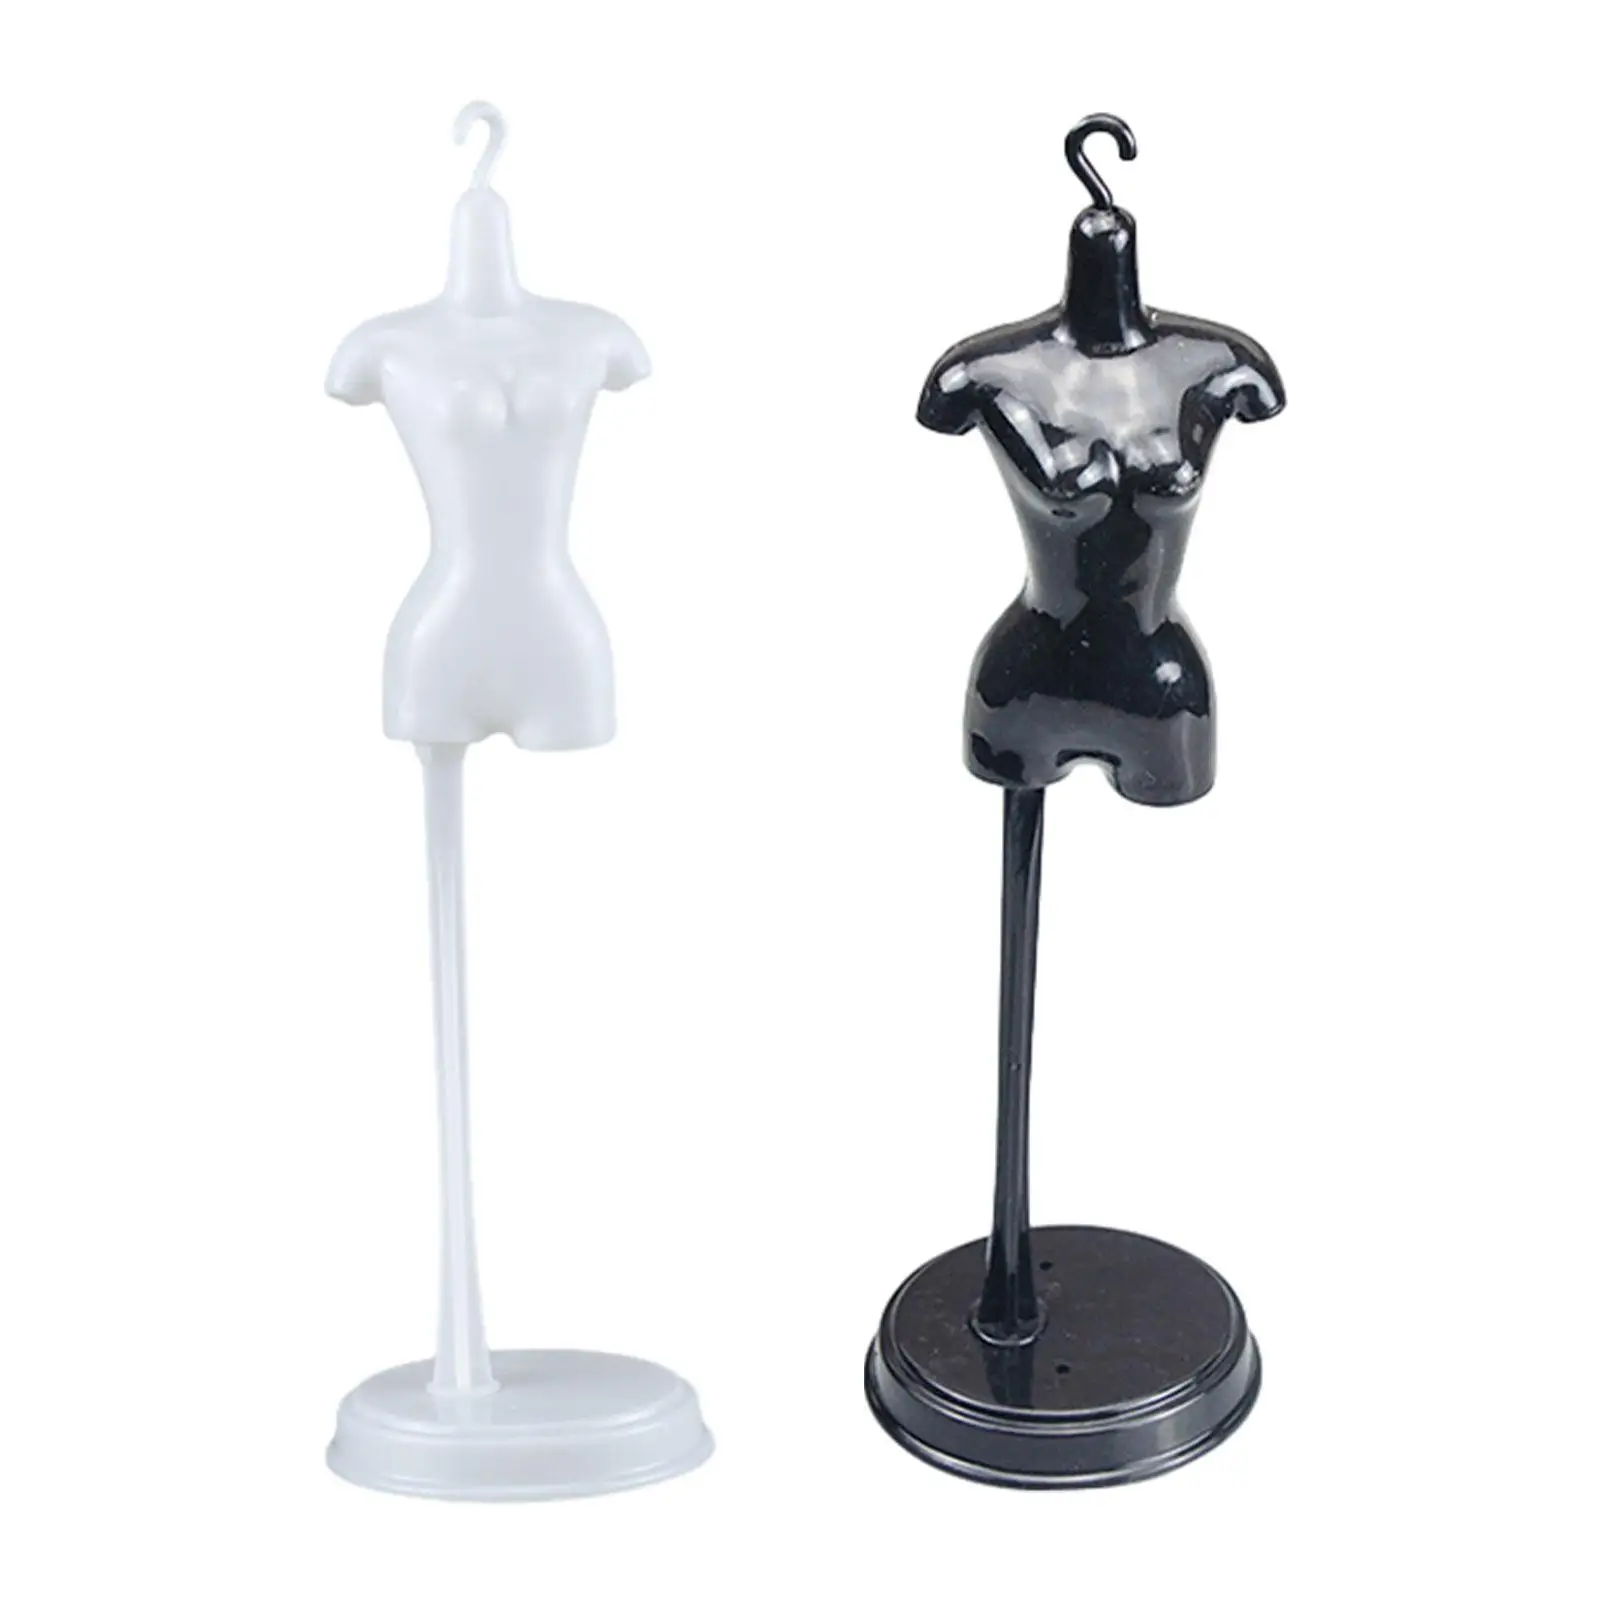 1:6 Dollhouse Miniature Transparent Doll Stand Display Holder Prop up Dolls Action Figure Action Figures Holder Base Accs